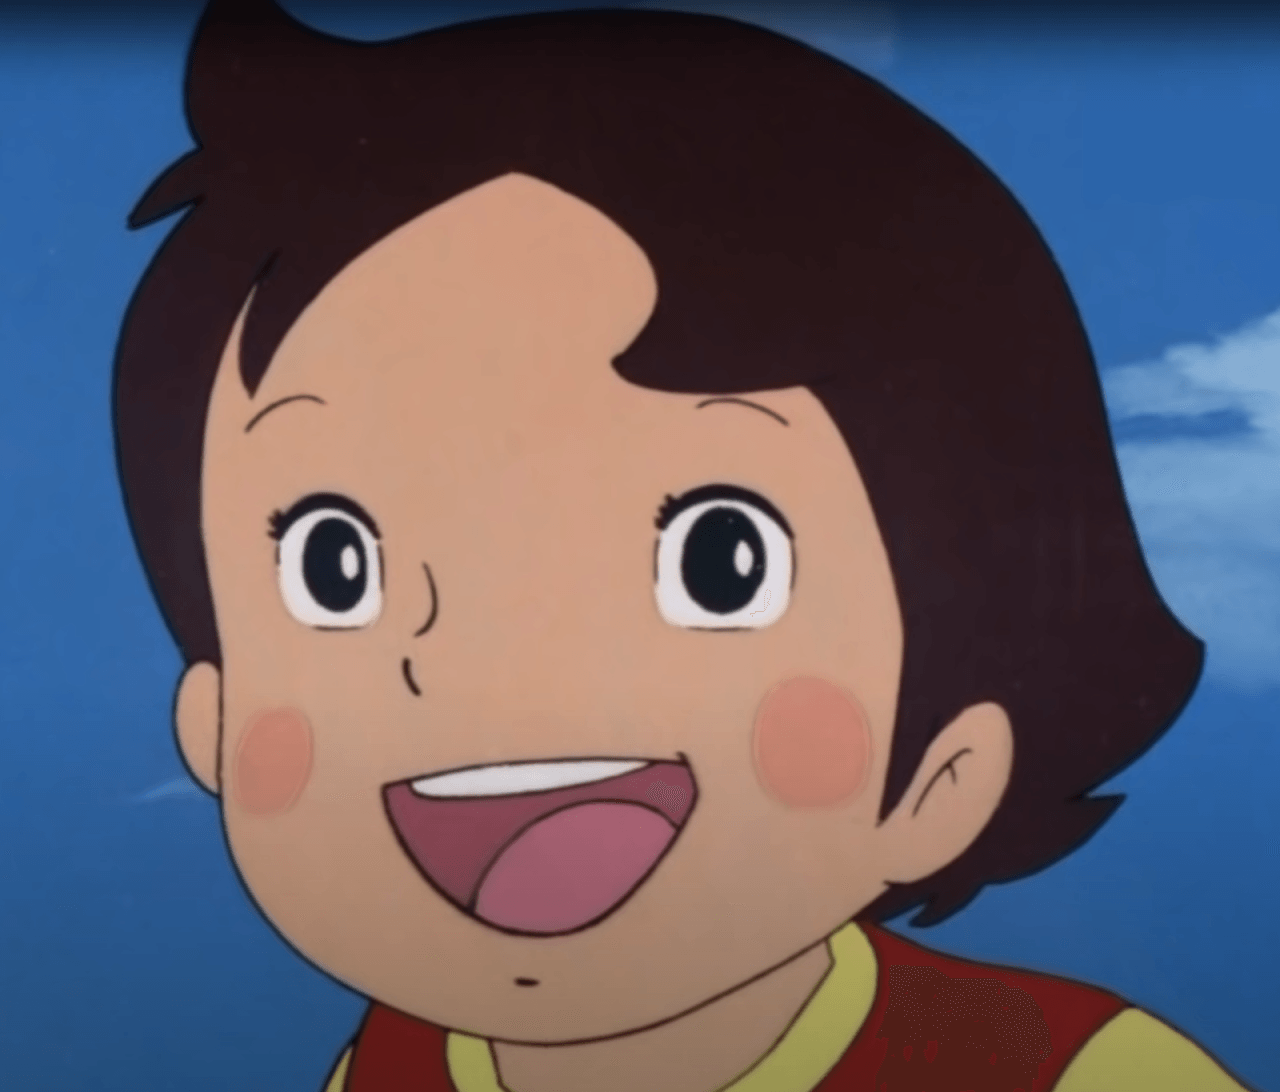 Cartoni animati giapponesi trasmessi in italia: i più amati